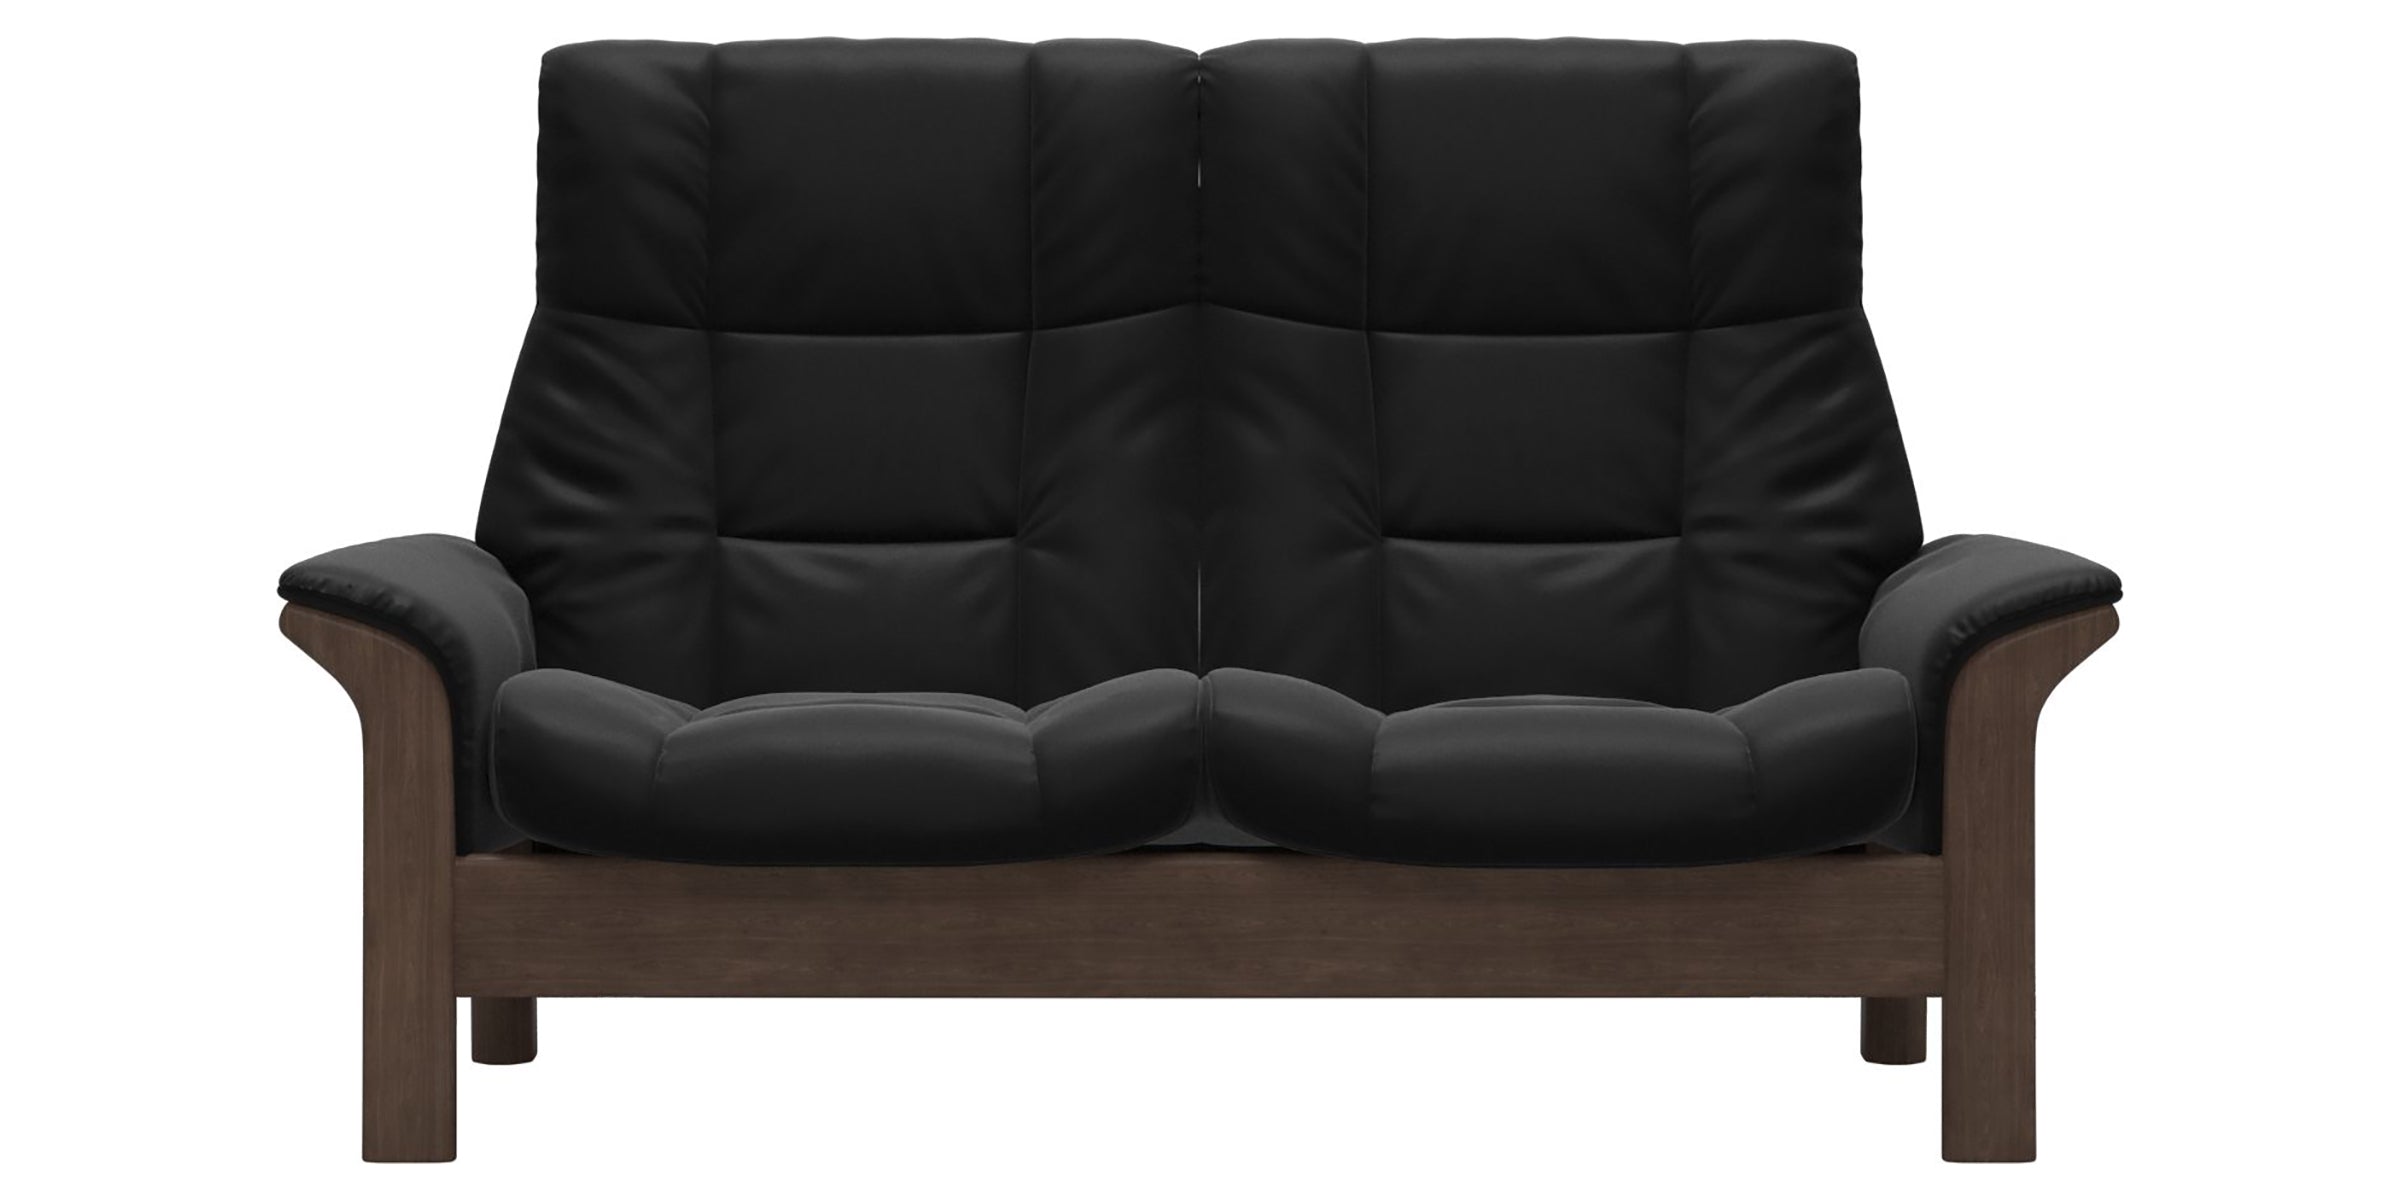 Paloma Leather Black and Walnut Base | Stressless Buckingham 2-Seater High Back Sofa | Valley Ridge Furniture